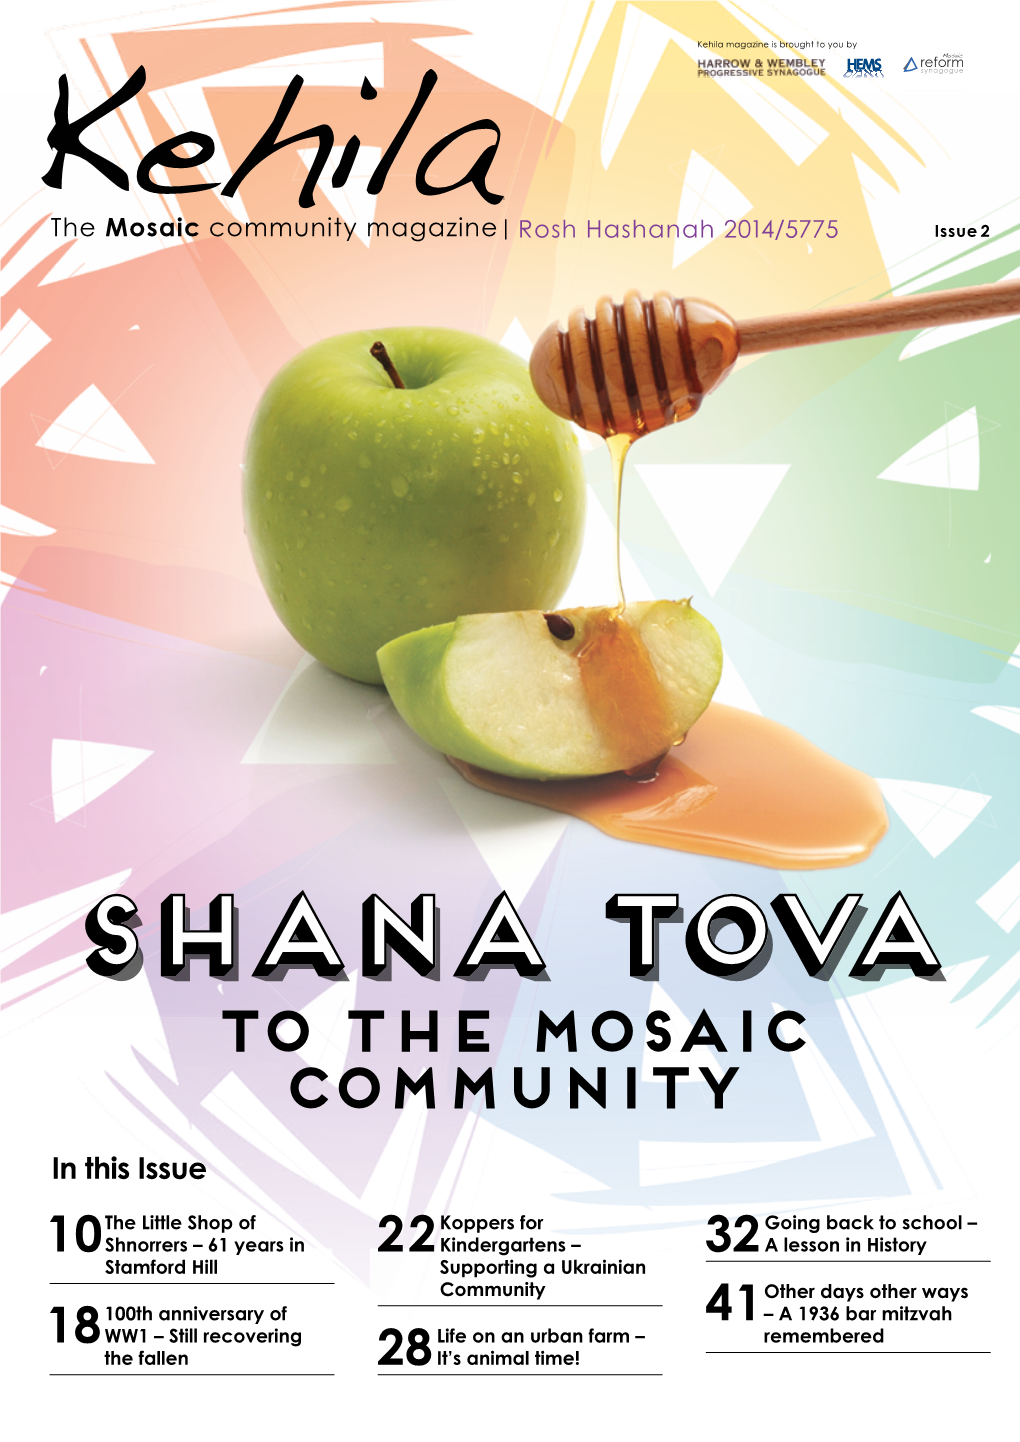 Shana Tova to the Mosaic Community